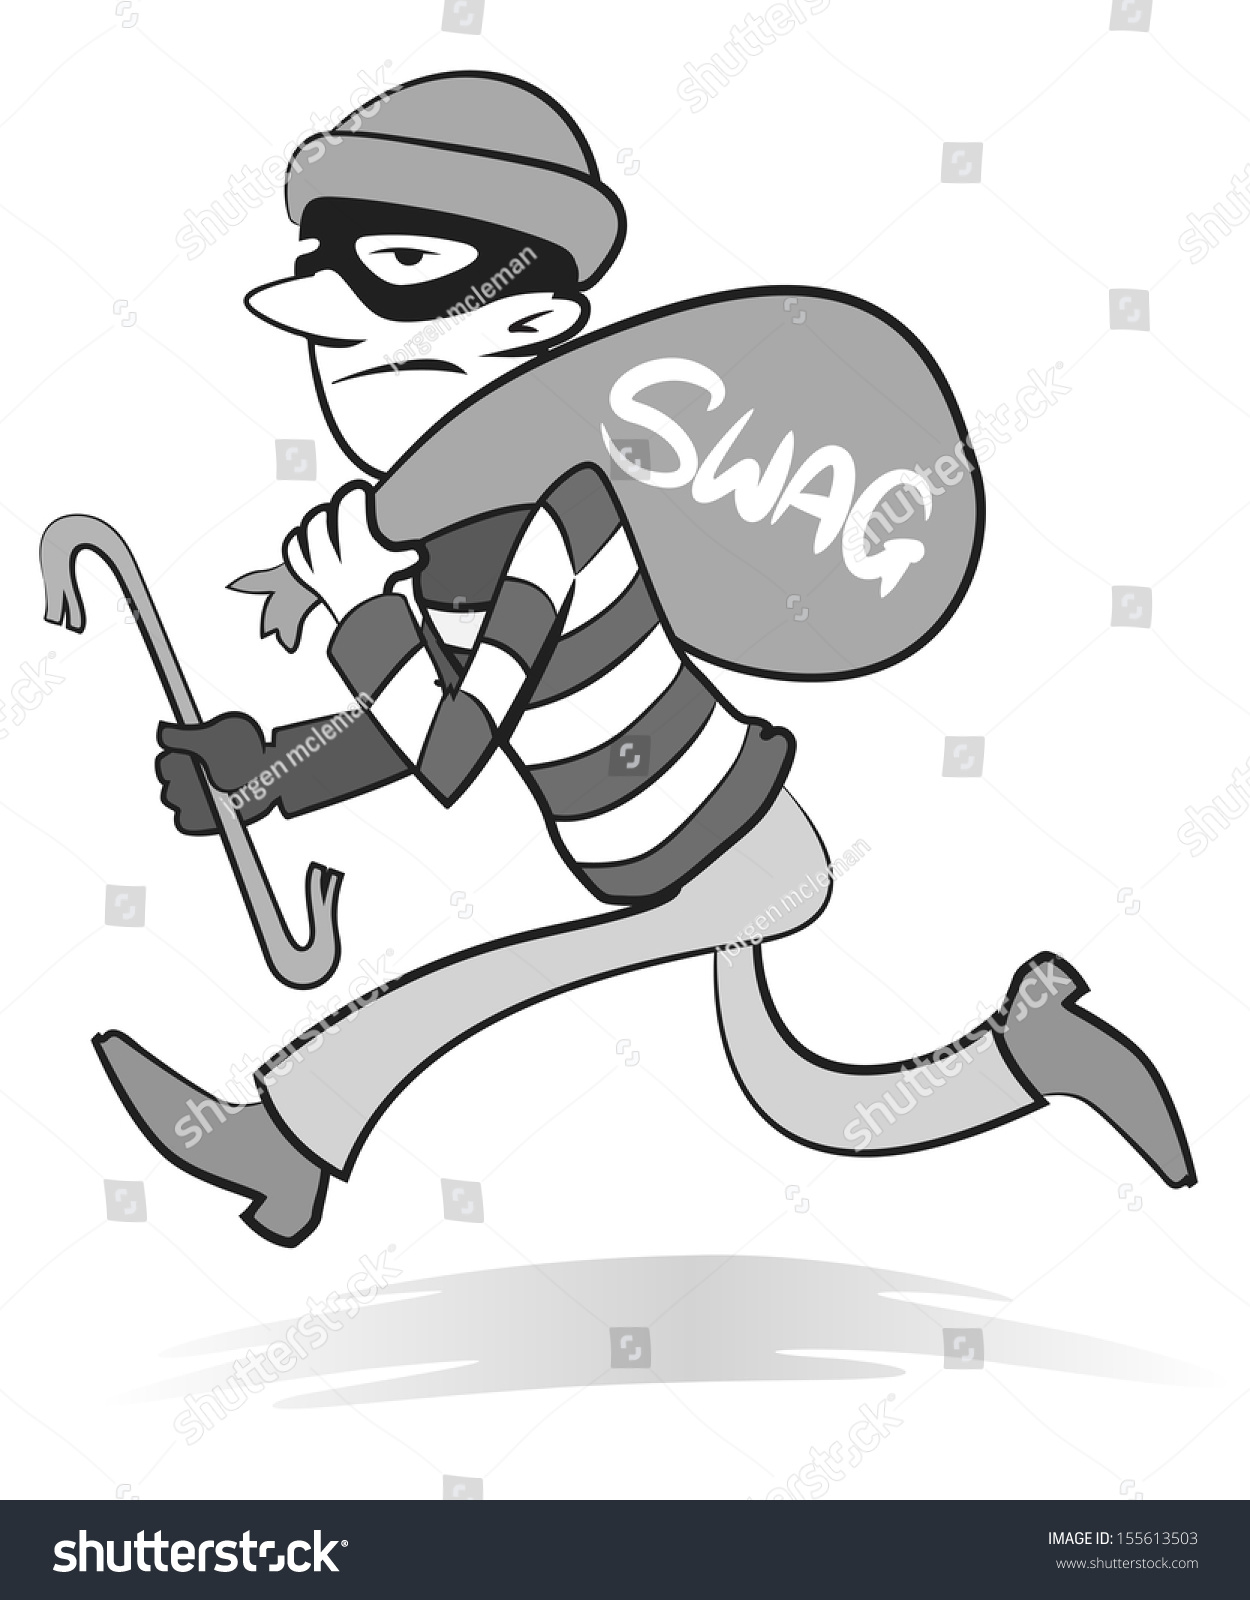 Burglar PNG Swag - 57779